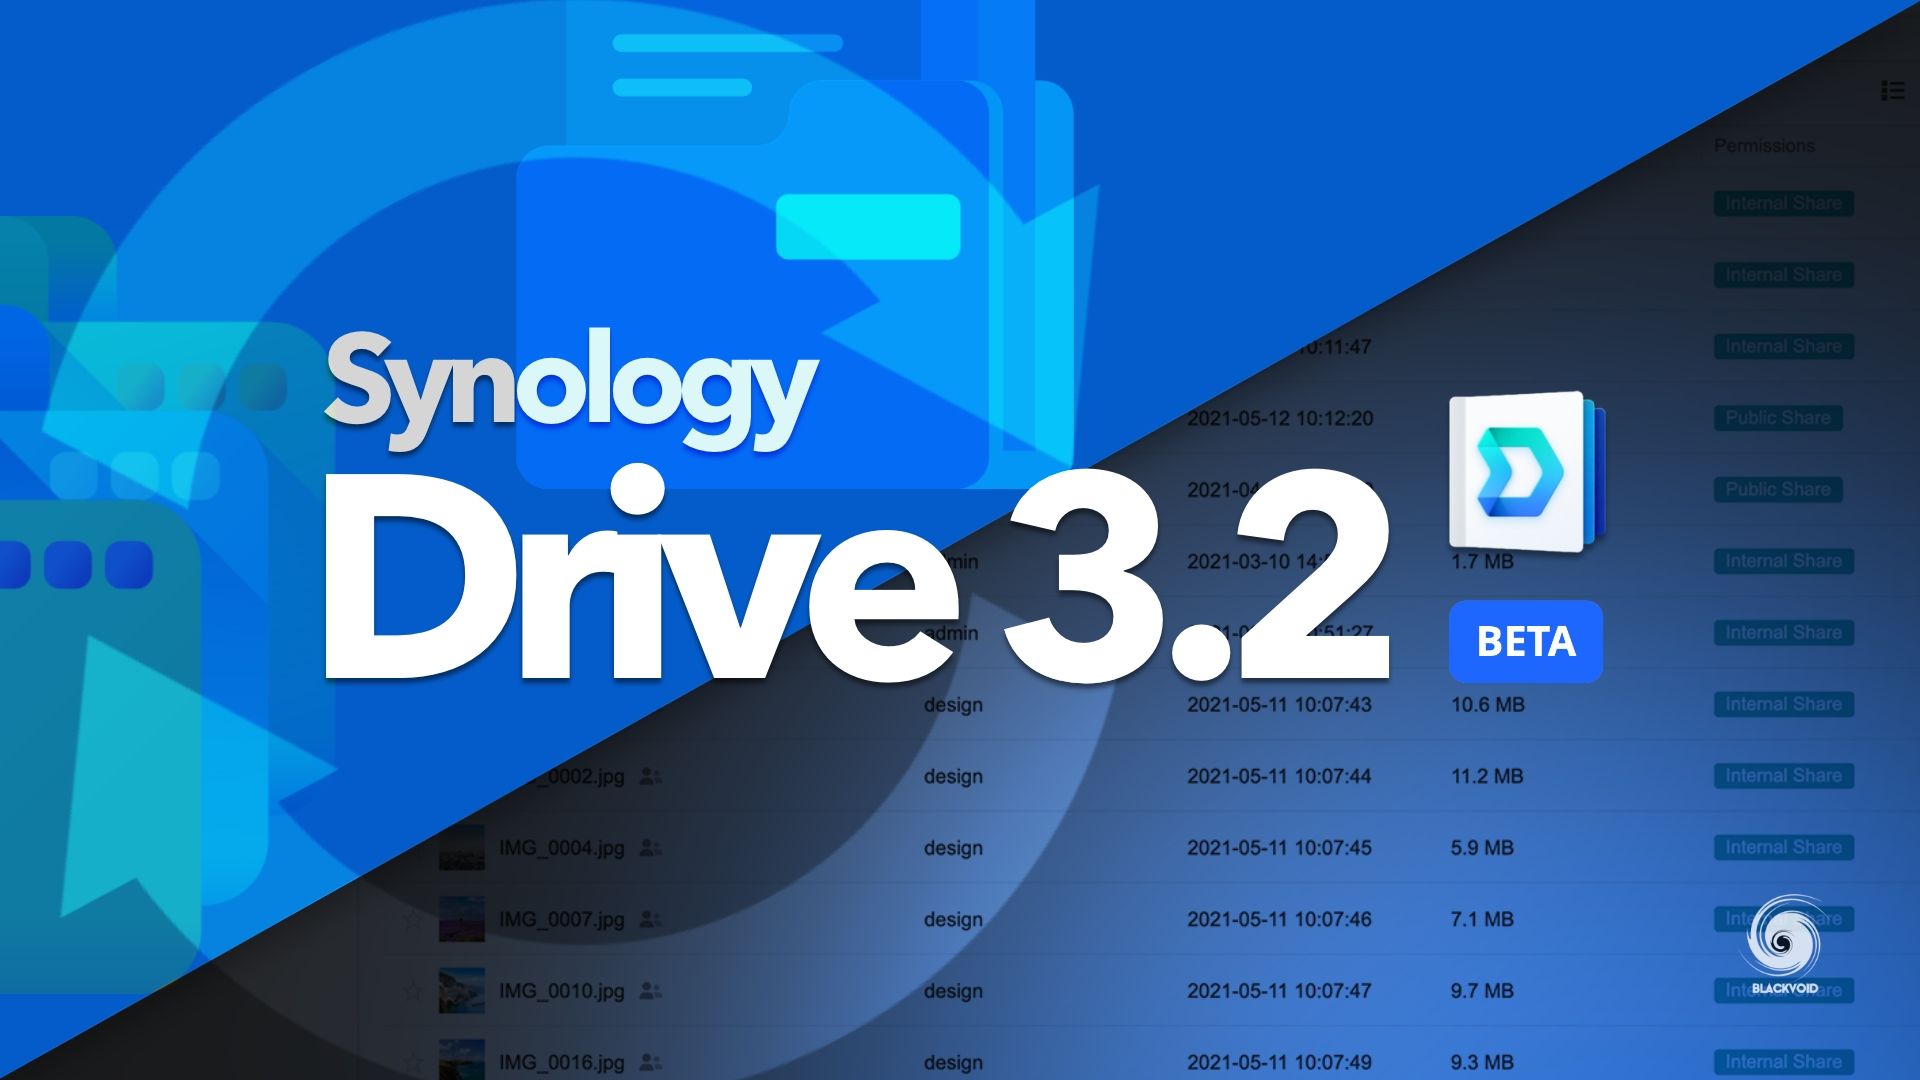 Synology Drive 3.2 beta